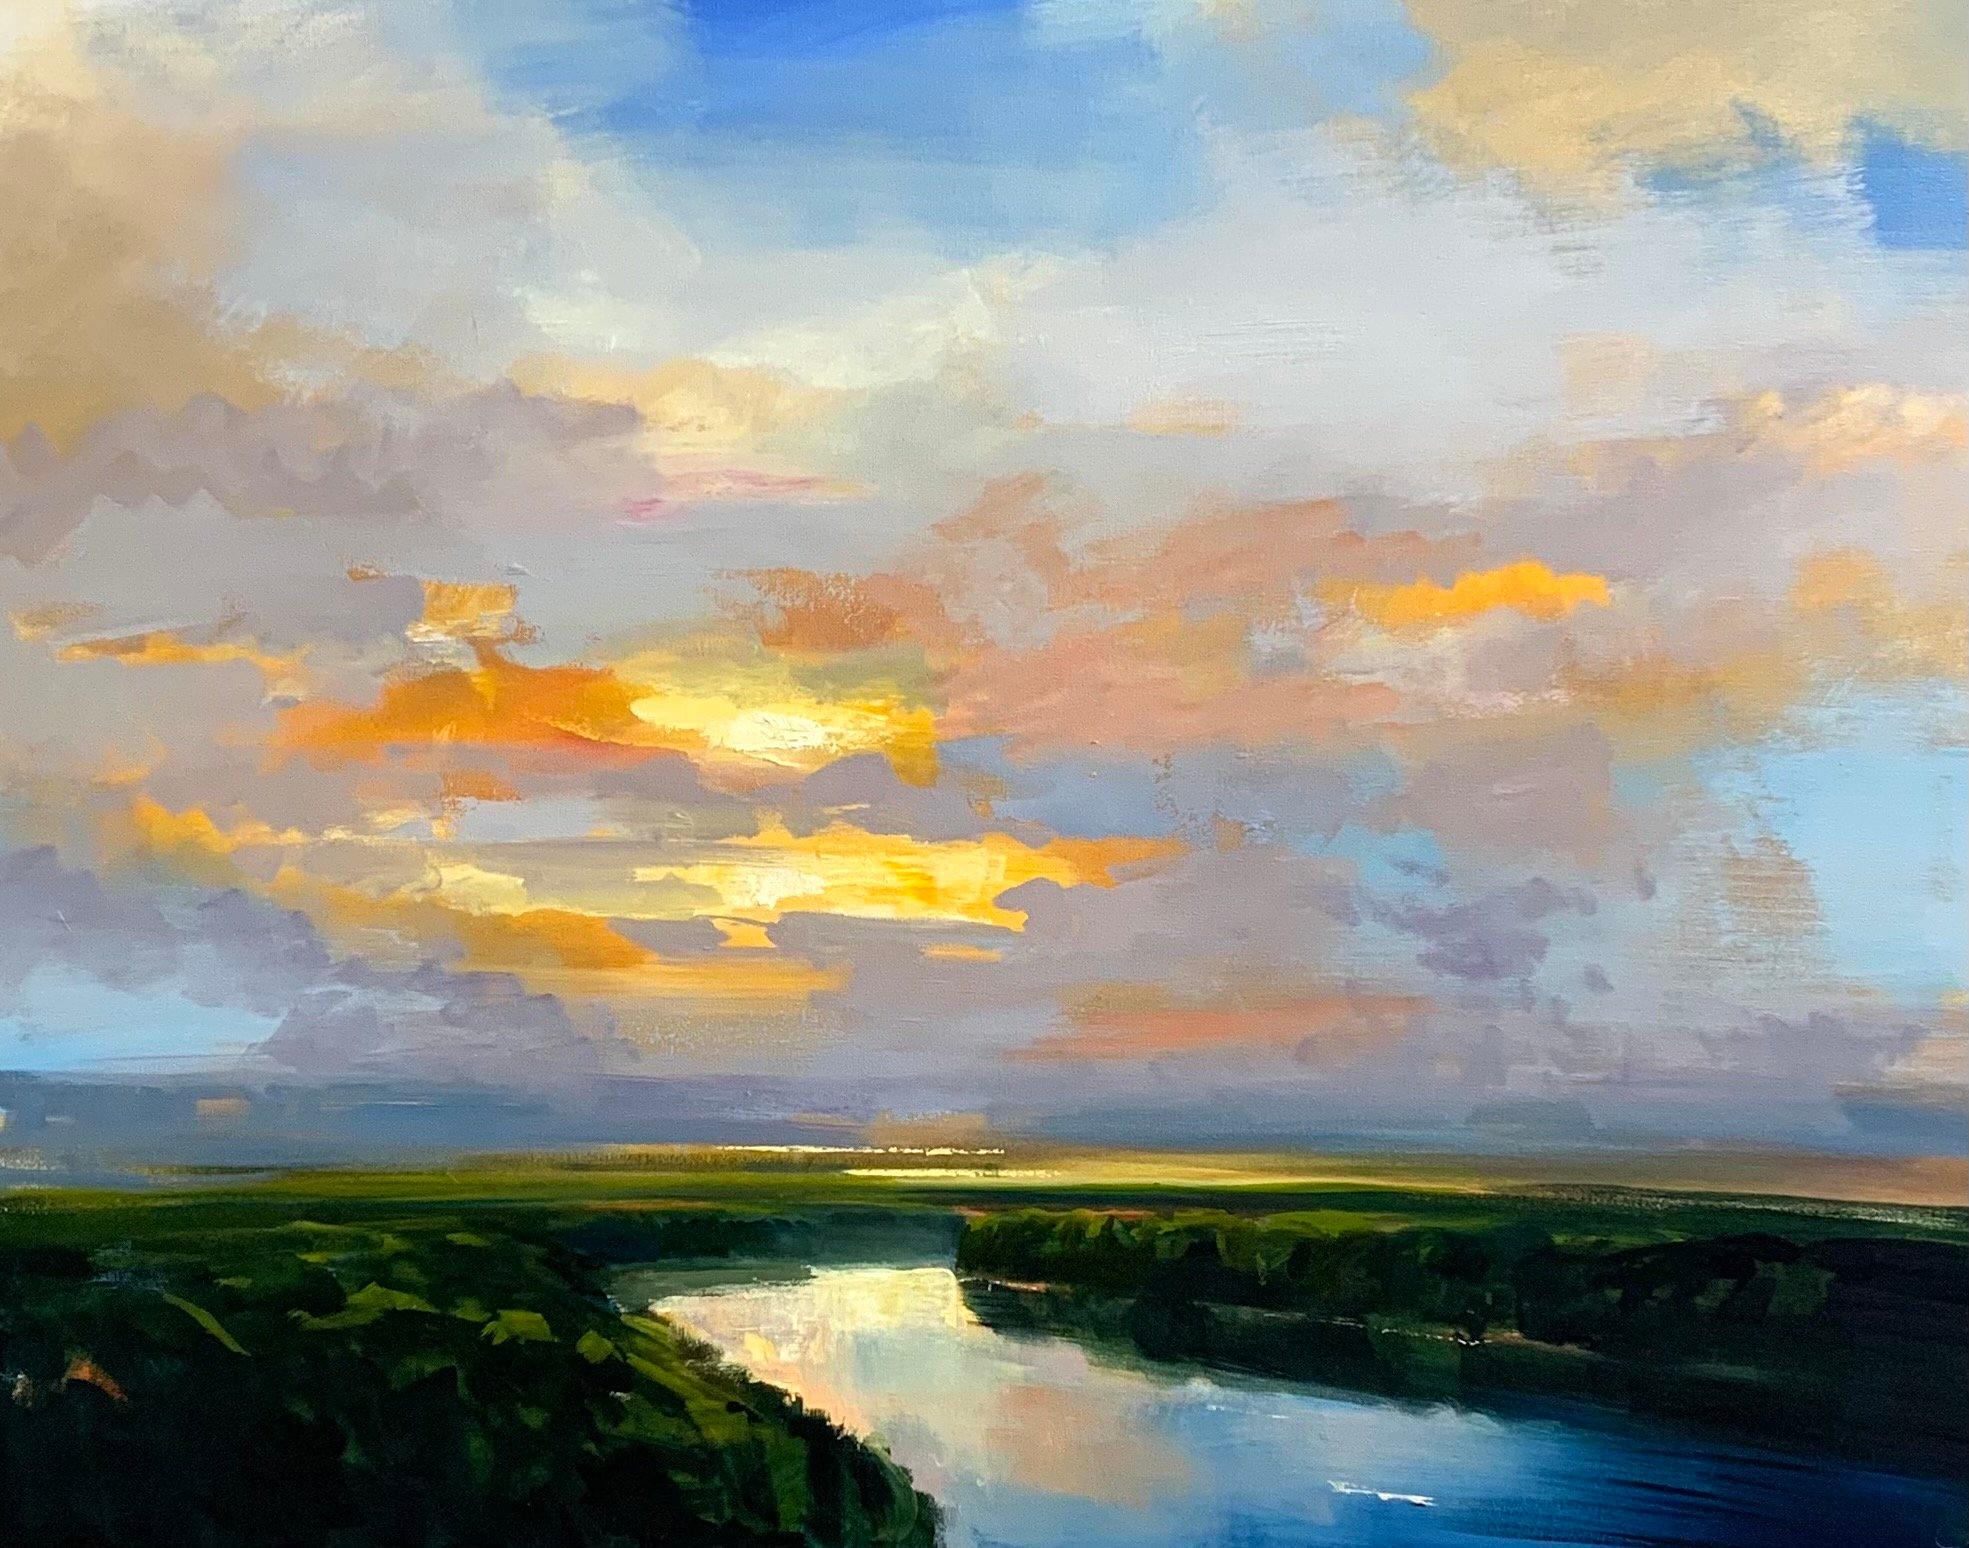 Craig Mooney, "River Bend", 36x48 Marsh Landscape Oil Painting on Canvas